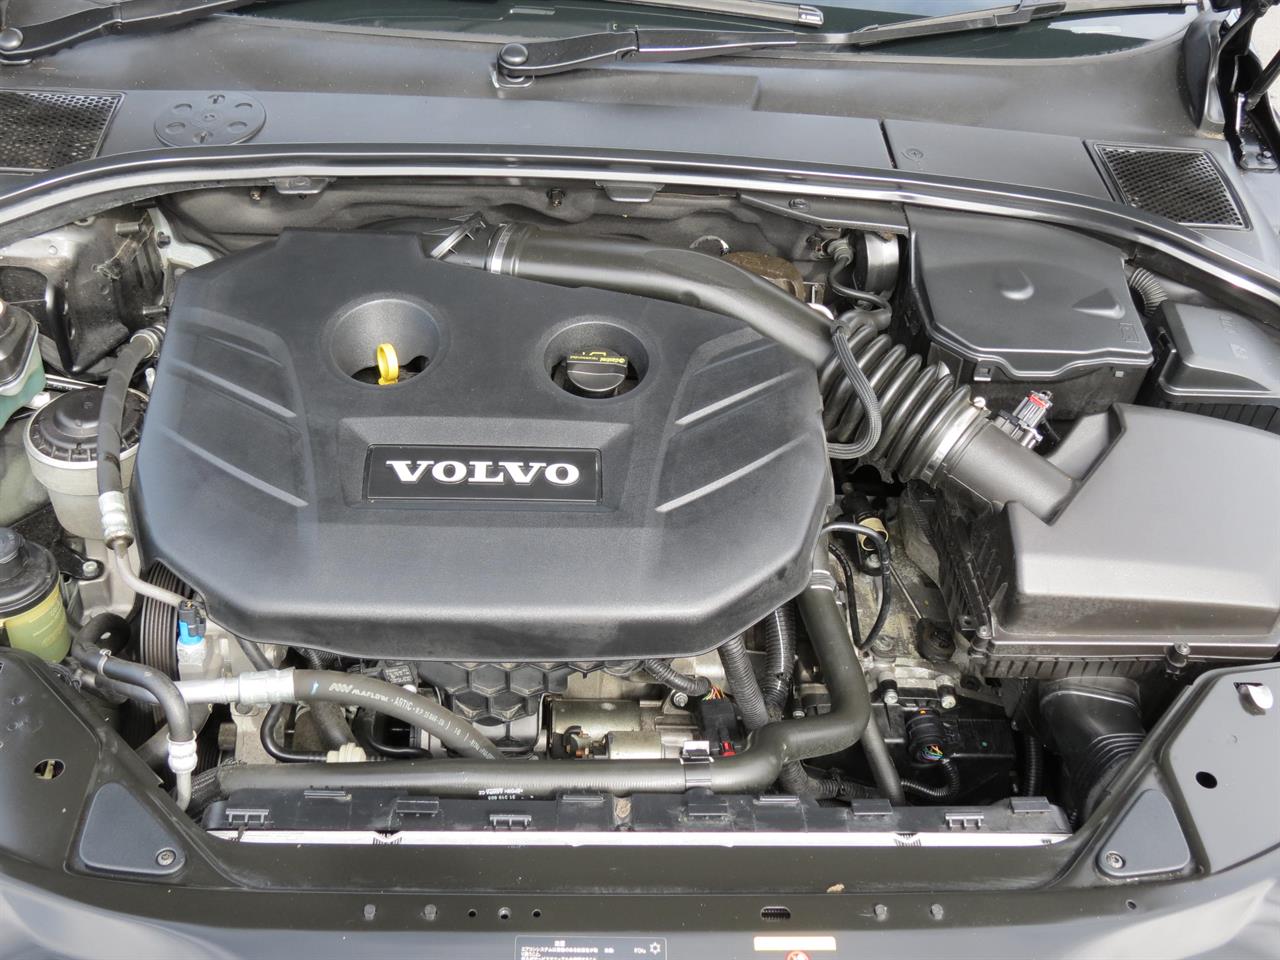 2012 Volvo V70 only $51 weekly